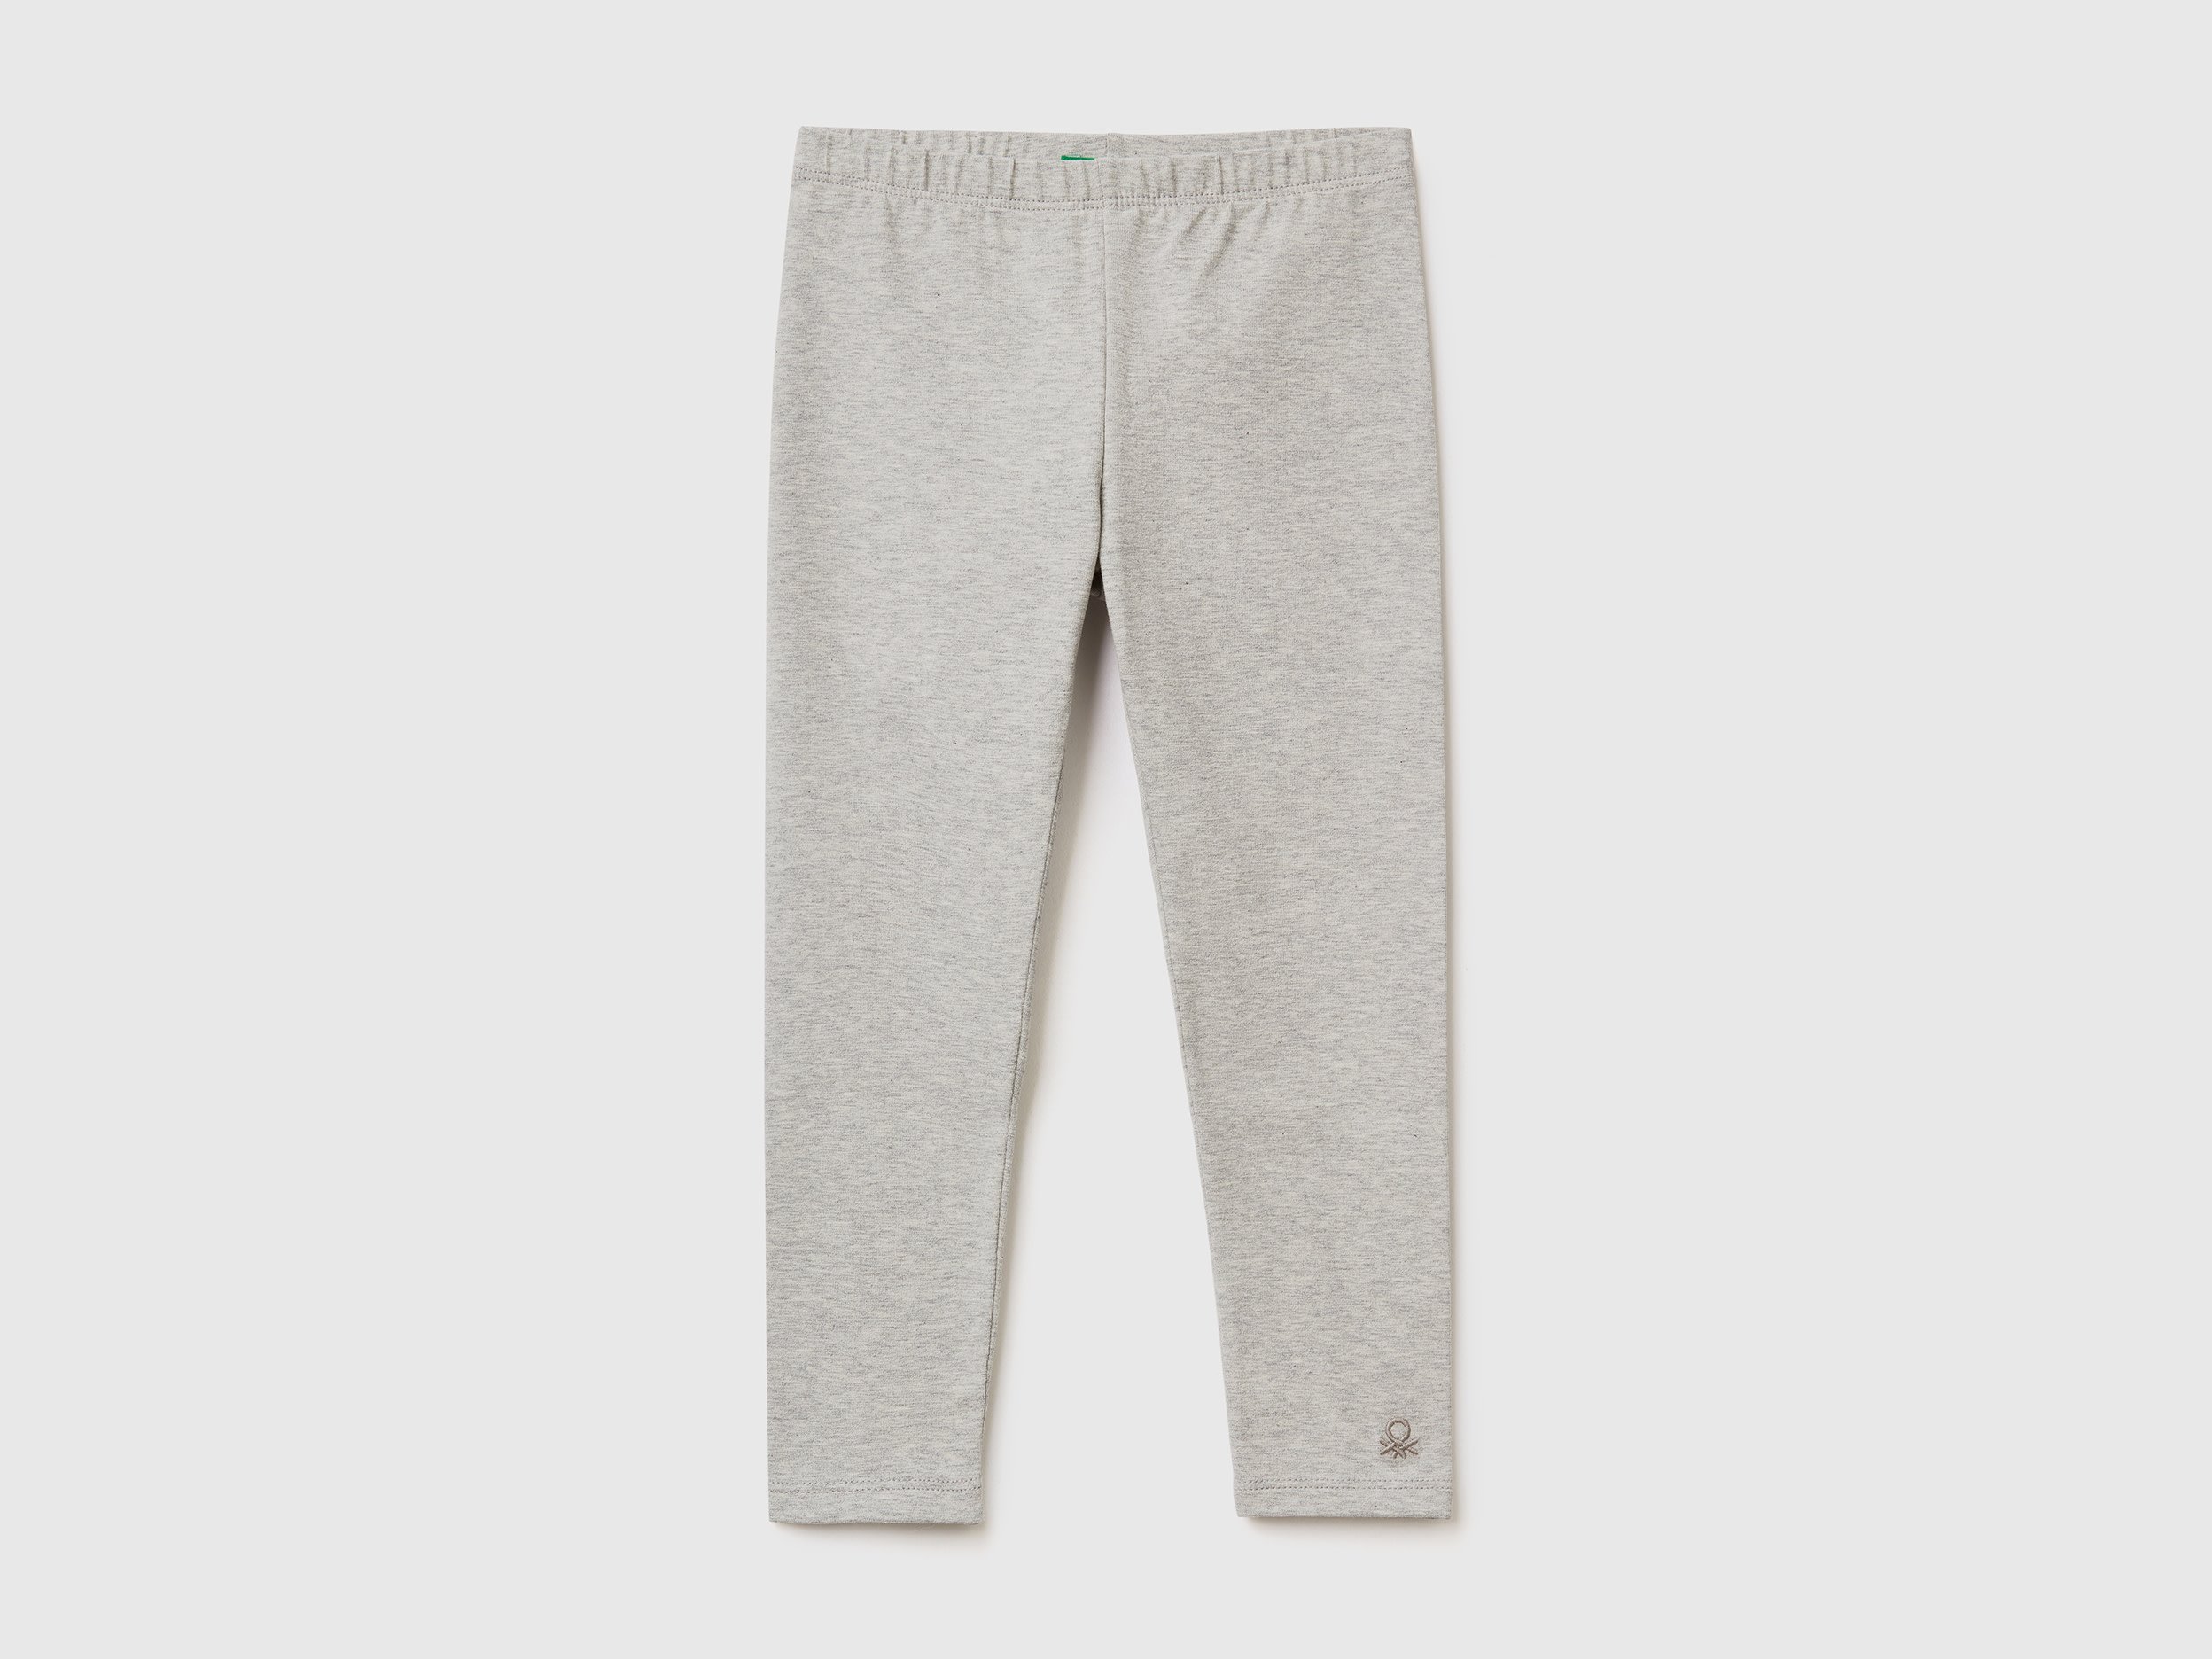 Benetton, Stretch Cotton Leggings, size 3-4, Light Gray, Kids